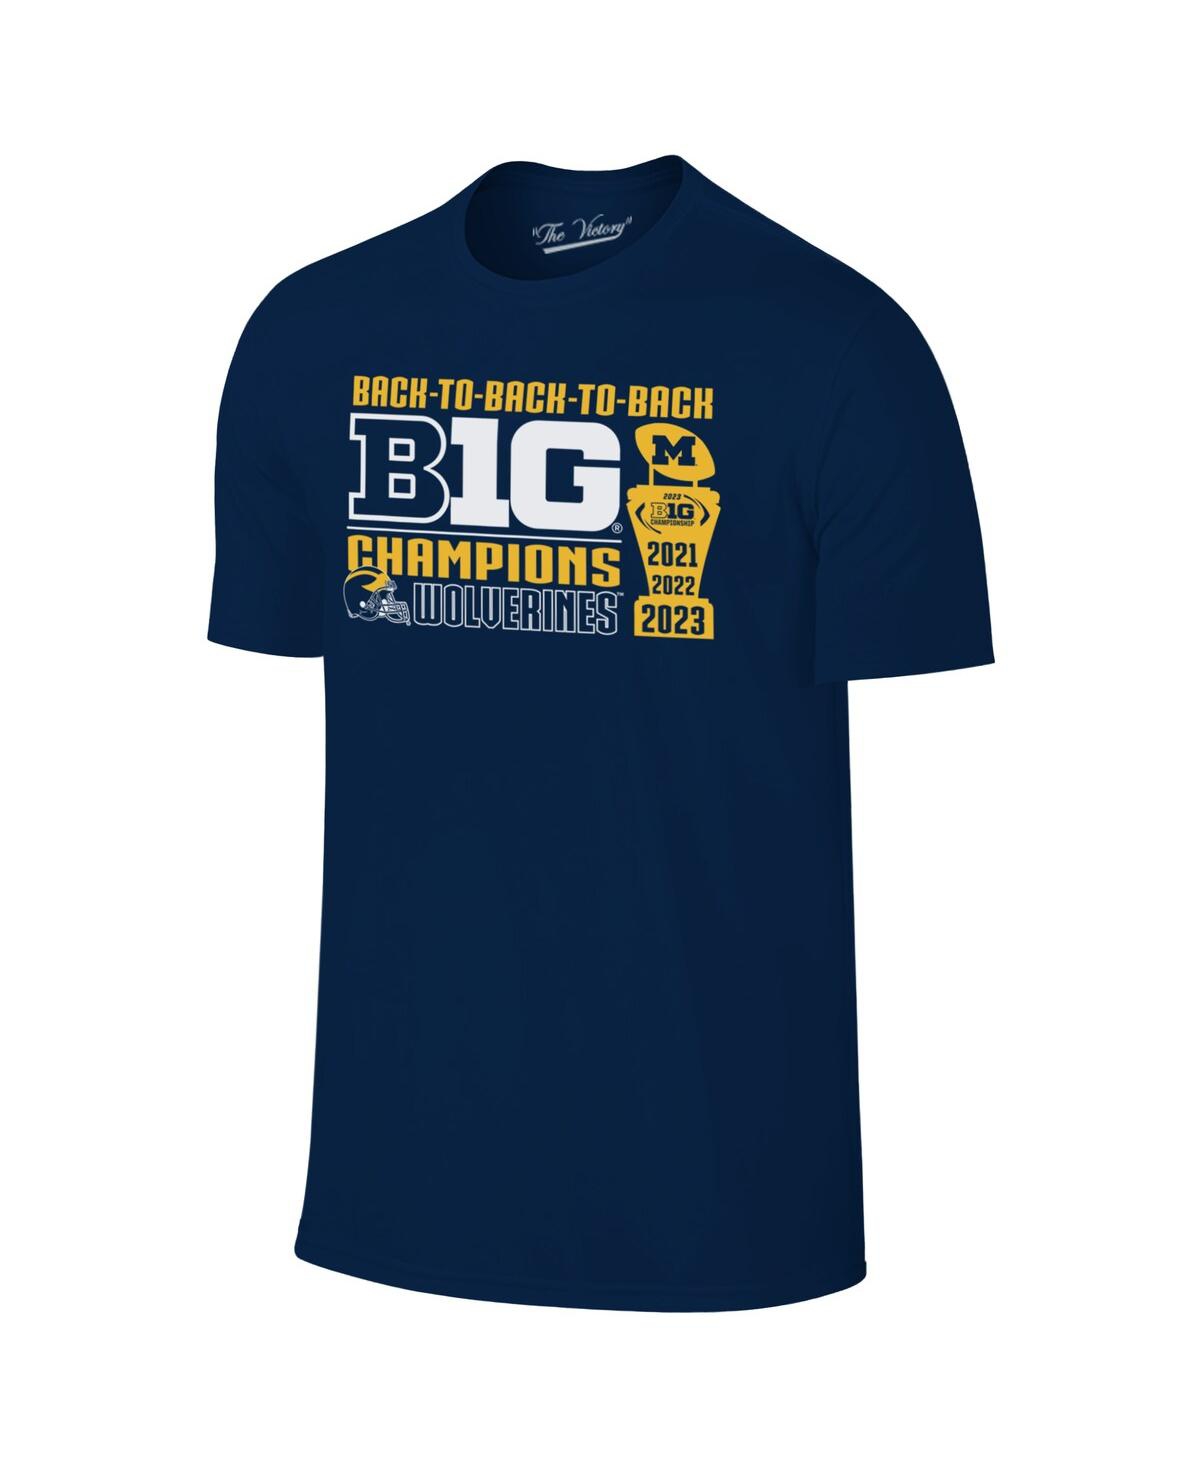 Men's Original Retro Brand Navy Michigan Wolverines Back-to-Back-to-Back Big Ten Conference Champions T-shirt - Navy